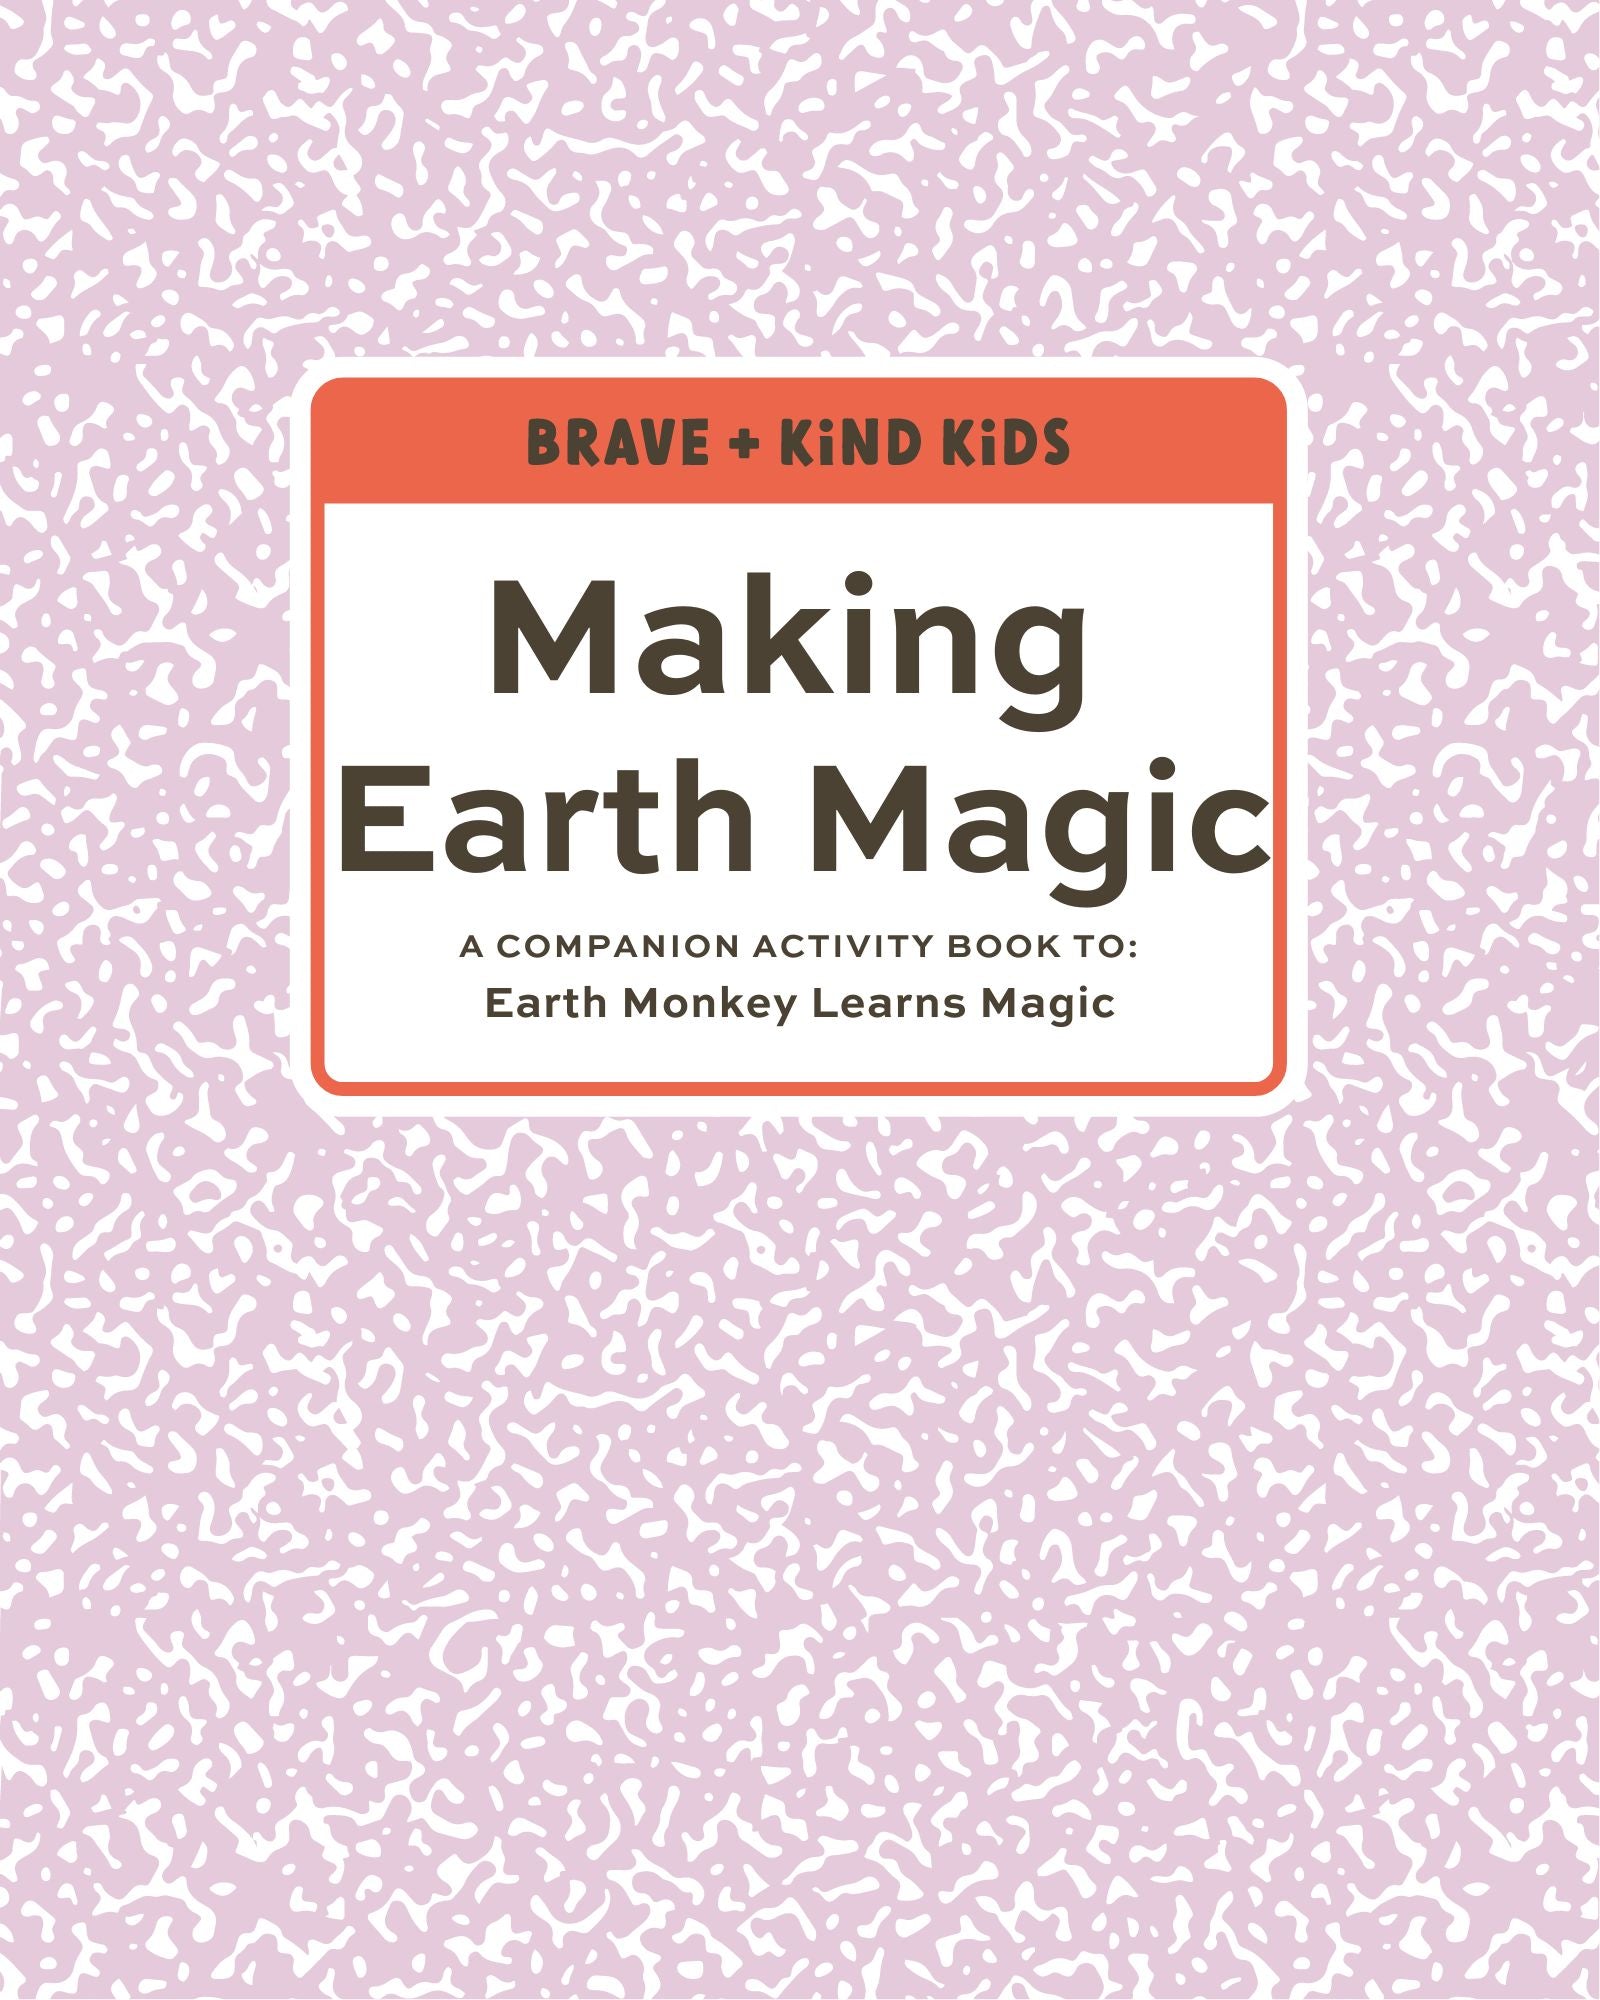 Making Earth Magic - Companion Activity Book to Earth Monkey Learns Magic